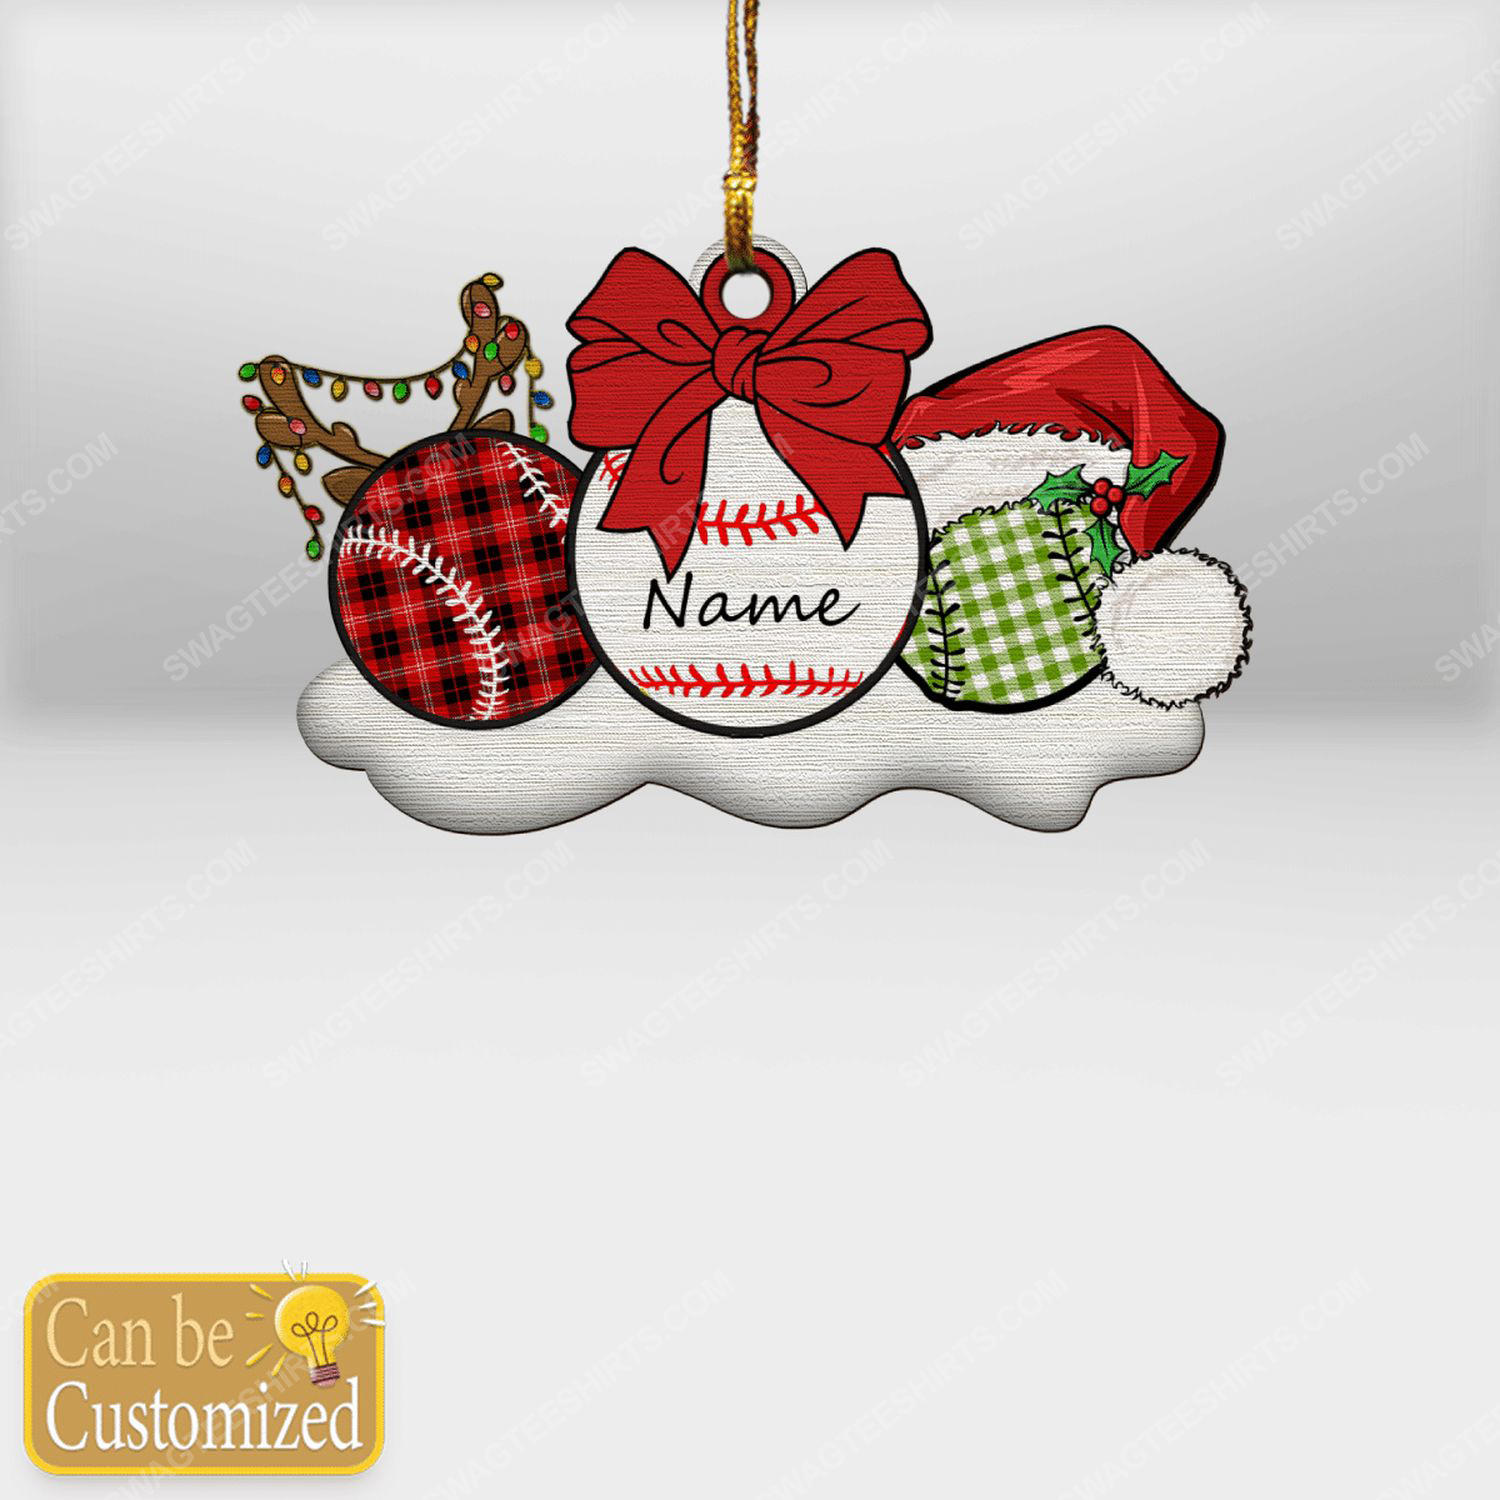 Custom baseball ball christmas gift ornament 1 - Copy